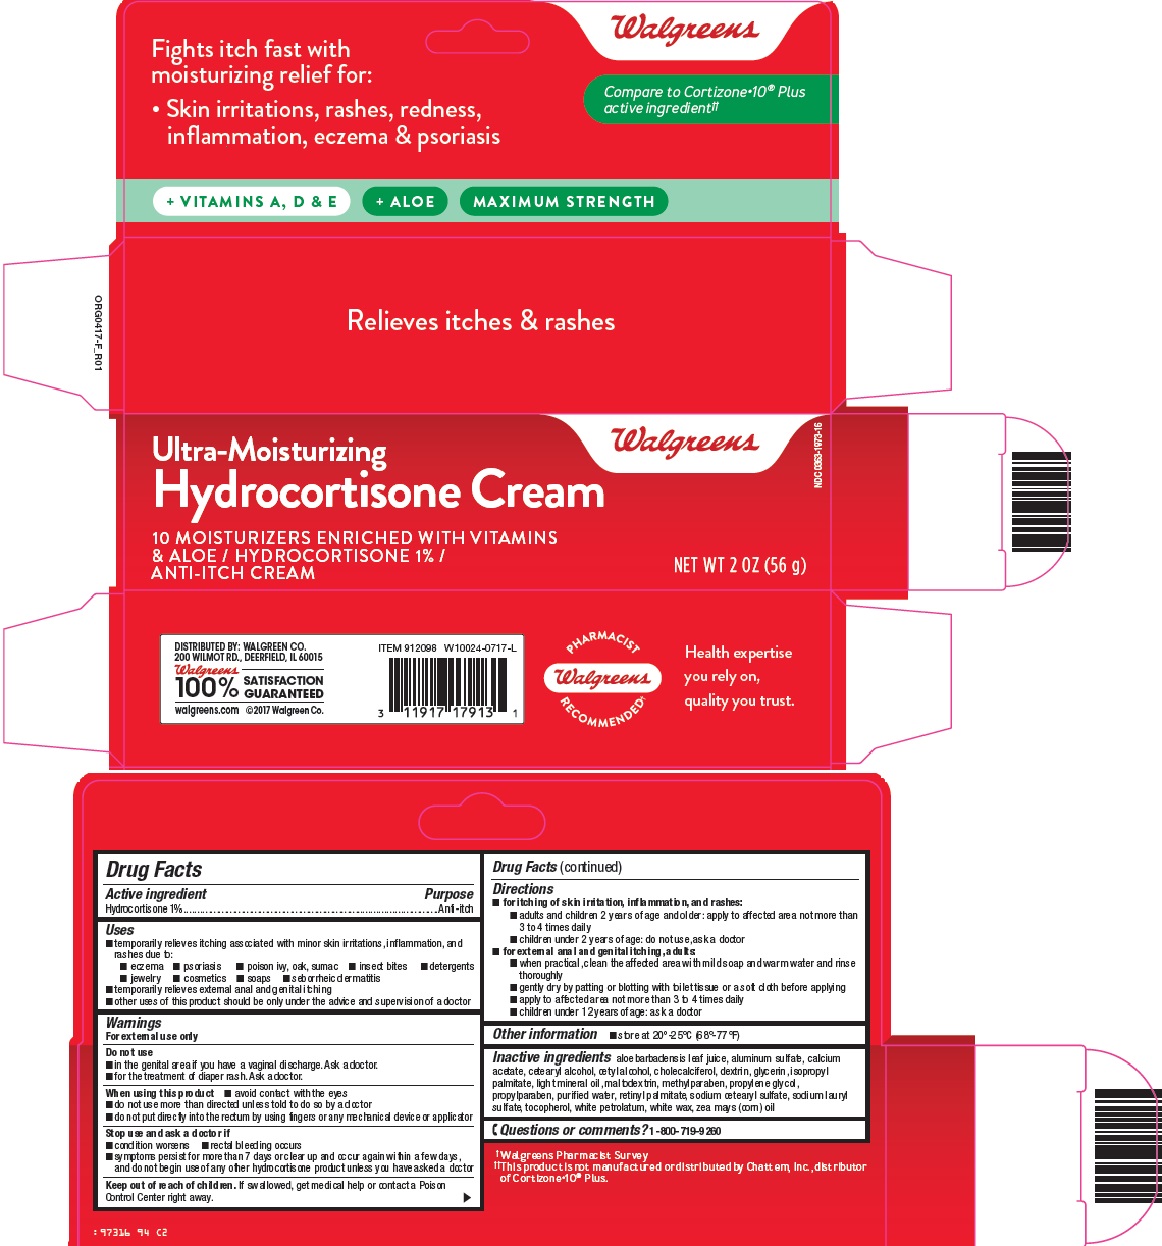 Hydrocortisone Cream image